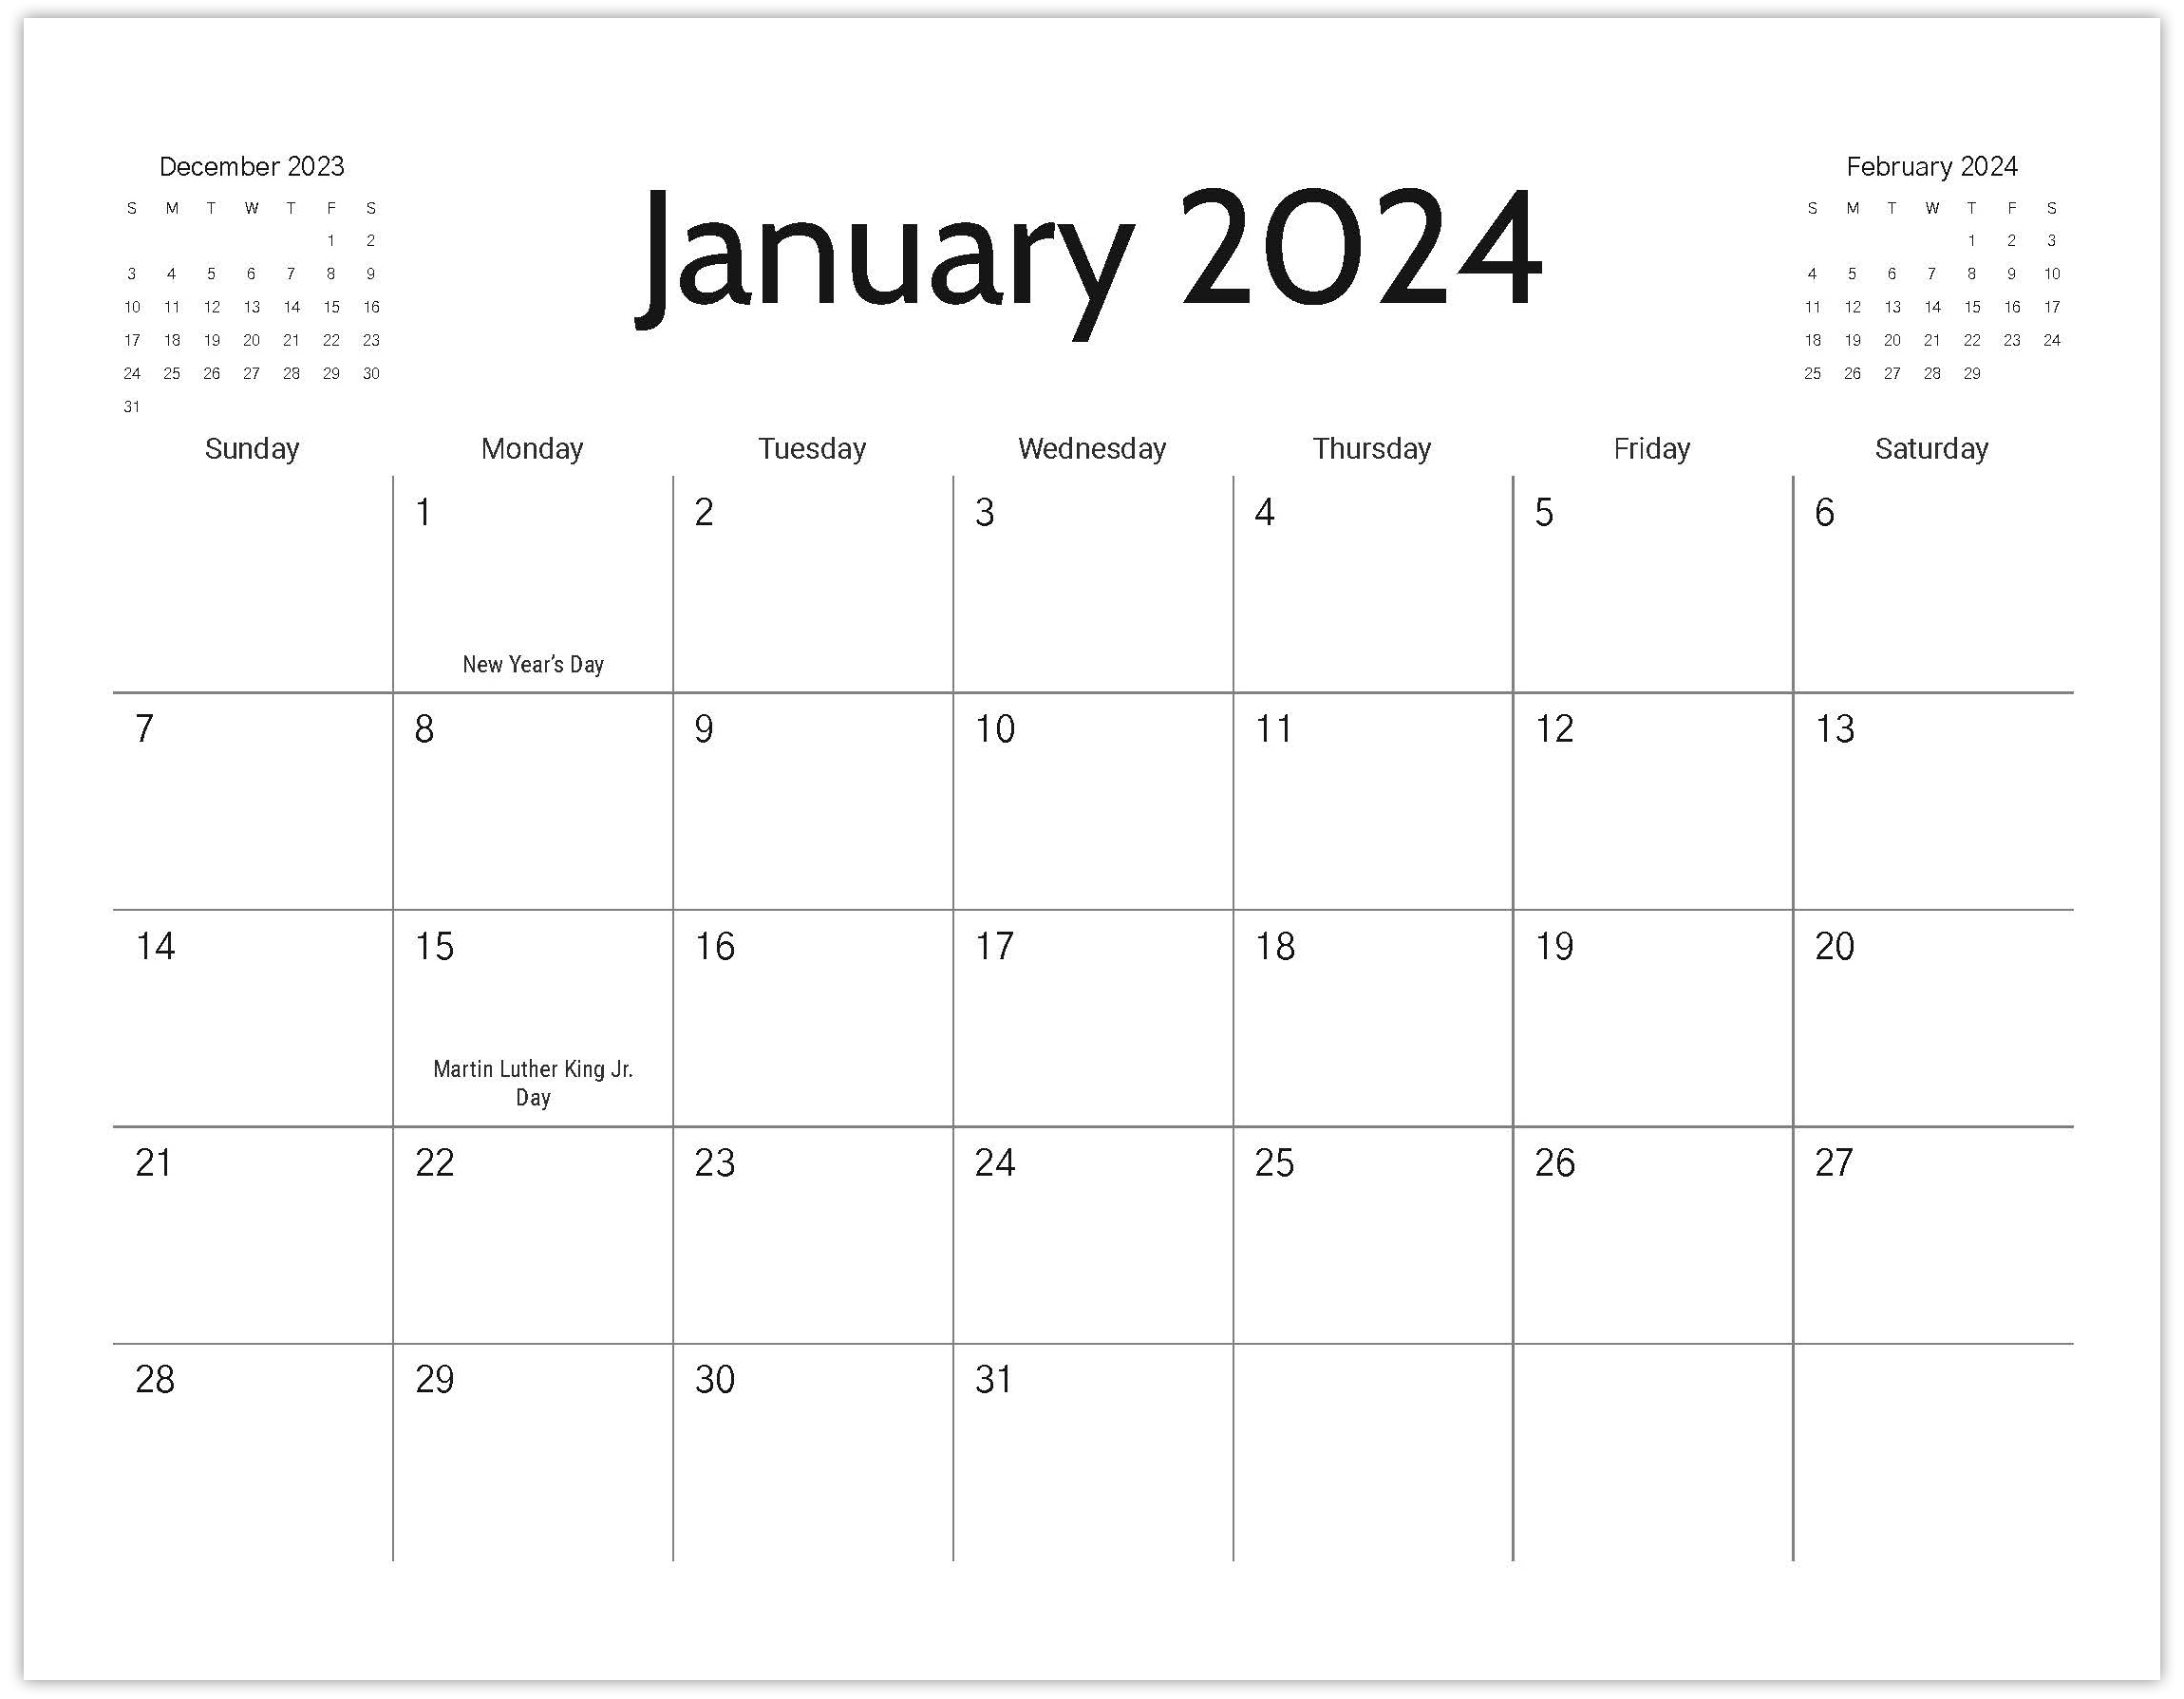 Free Printable Calendar 2024 | Printable Calendar 2024 Monthly With Holidays